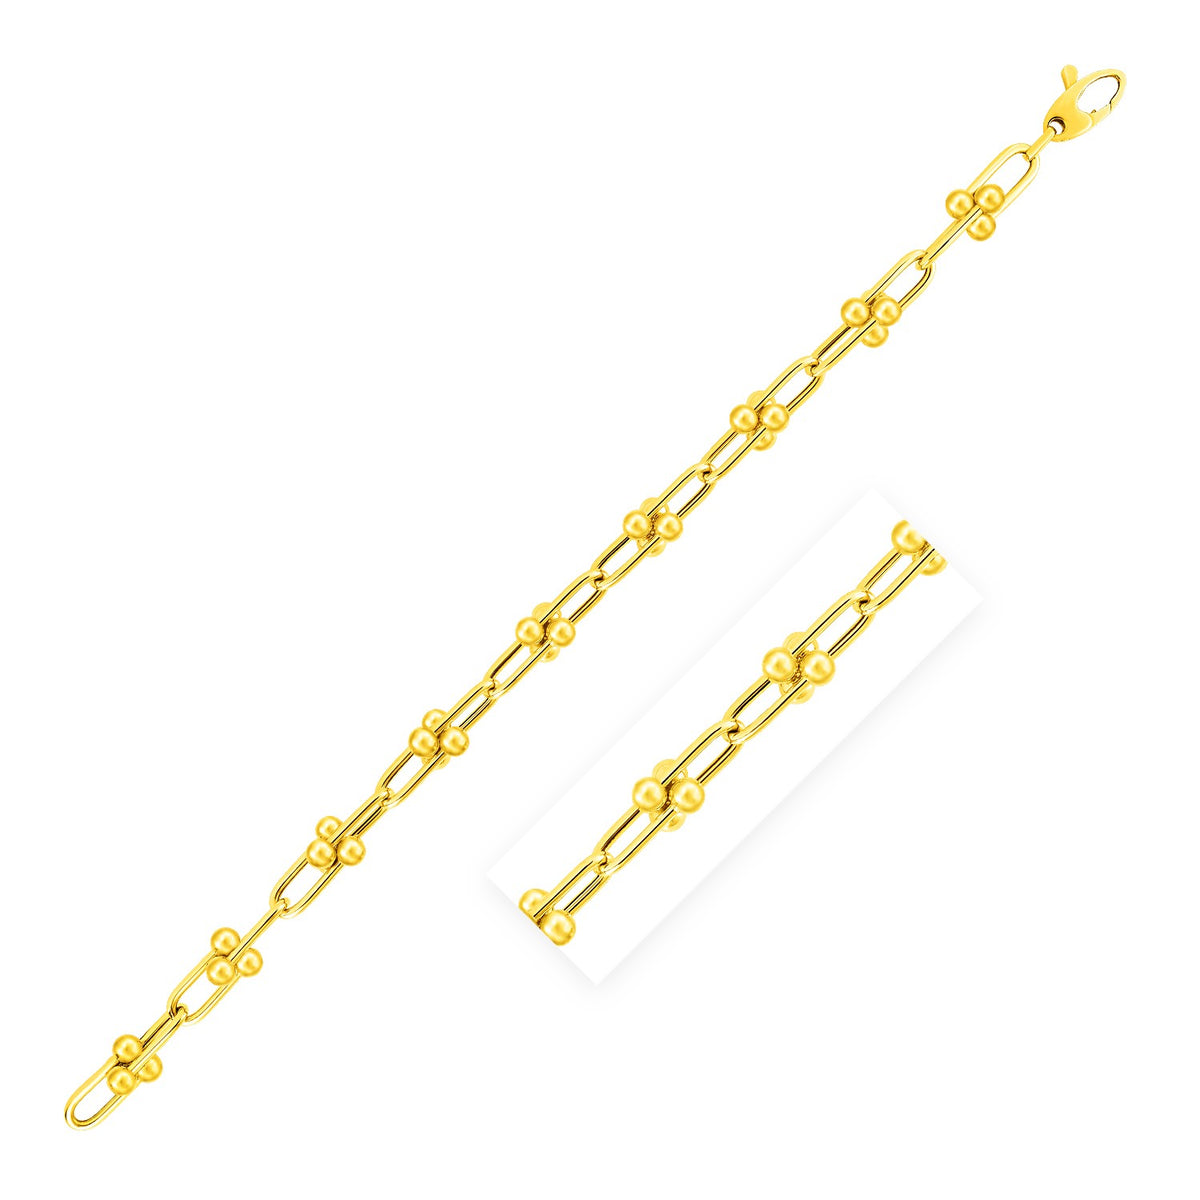 Jax Chain - 14k Yellow Gold 5.00mm